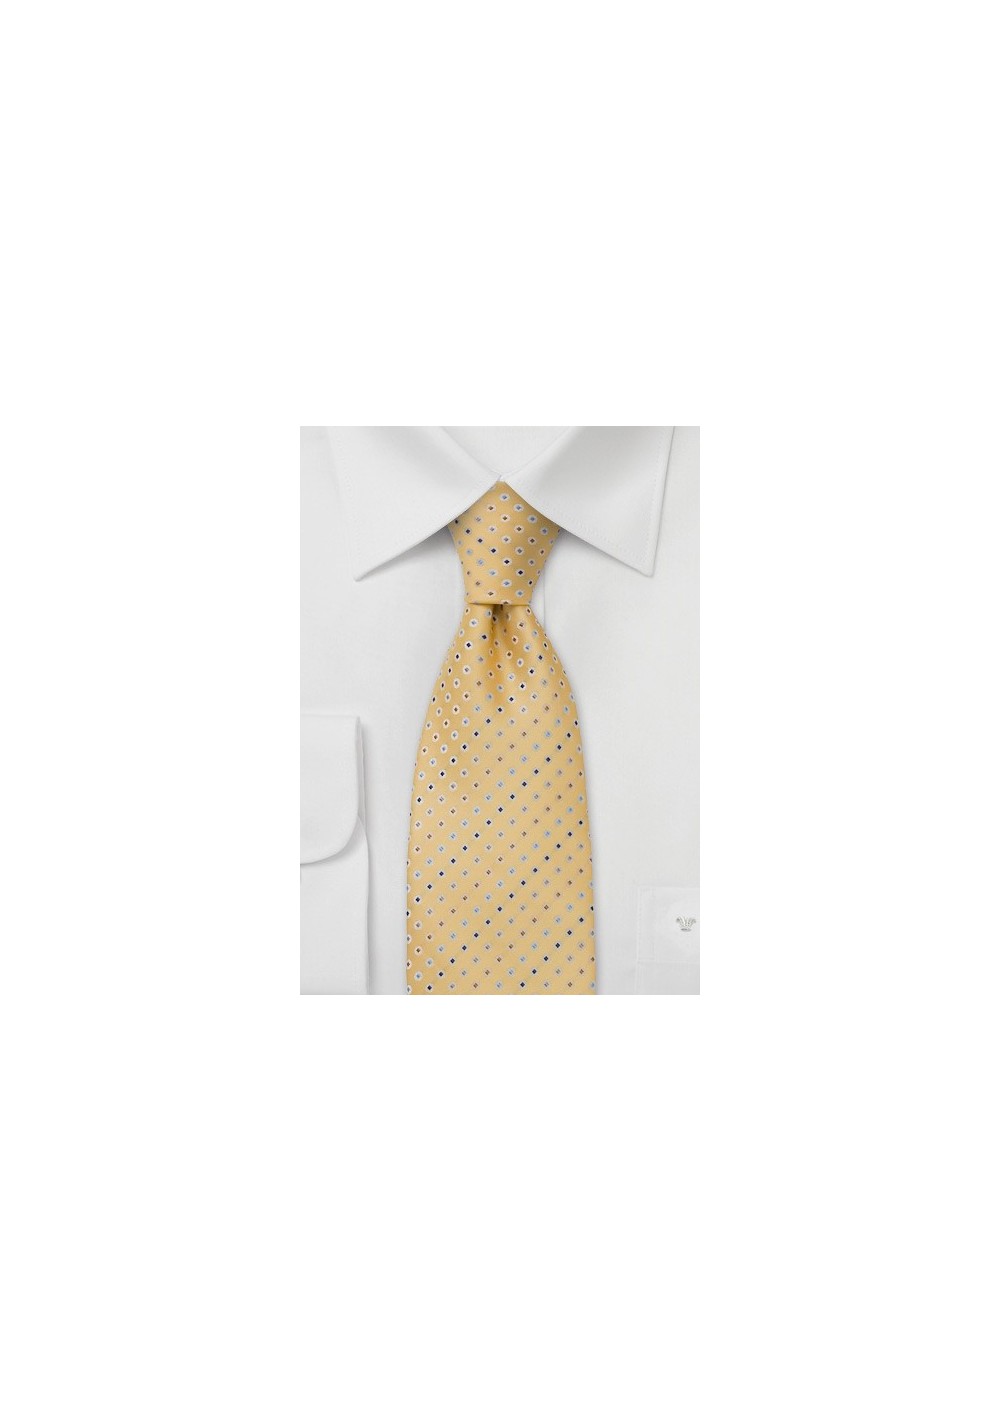 Spring tie in yellow - Fashionable microfiber necktie